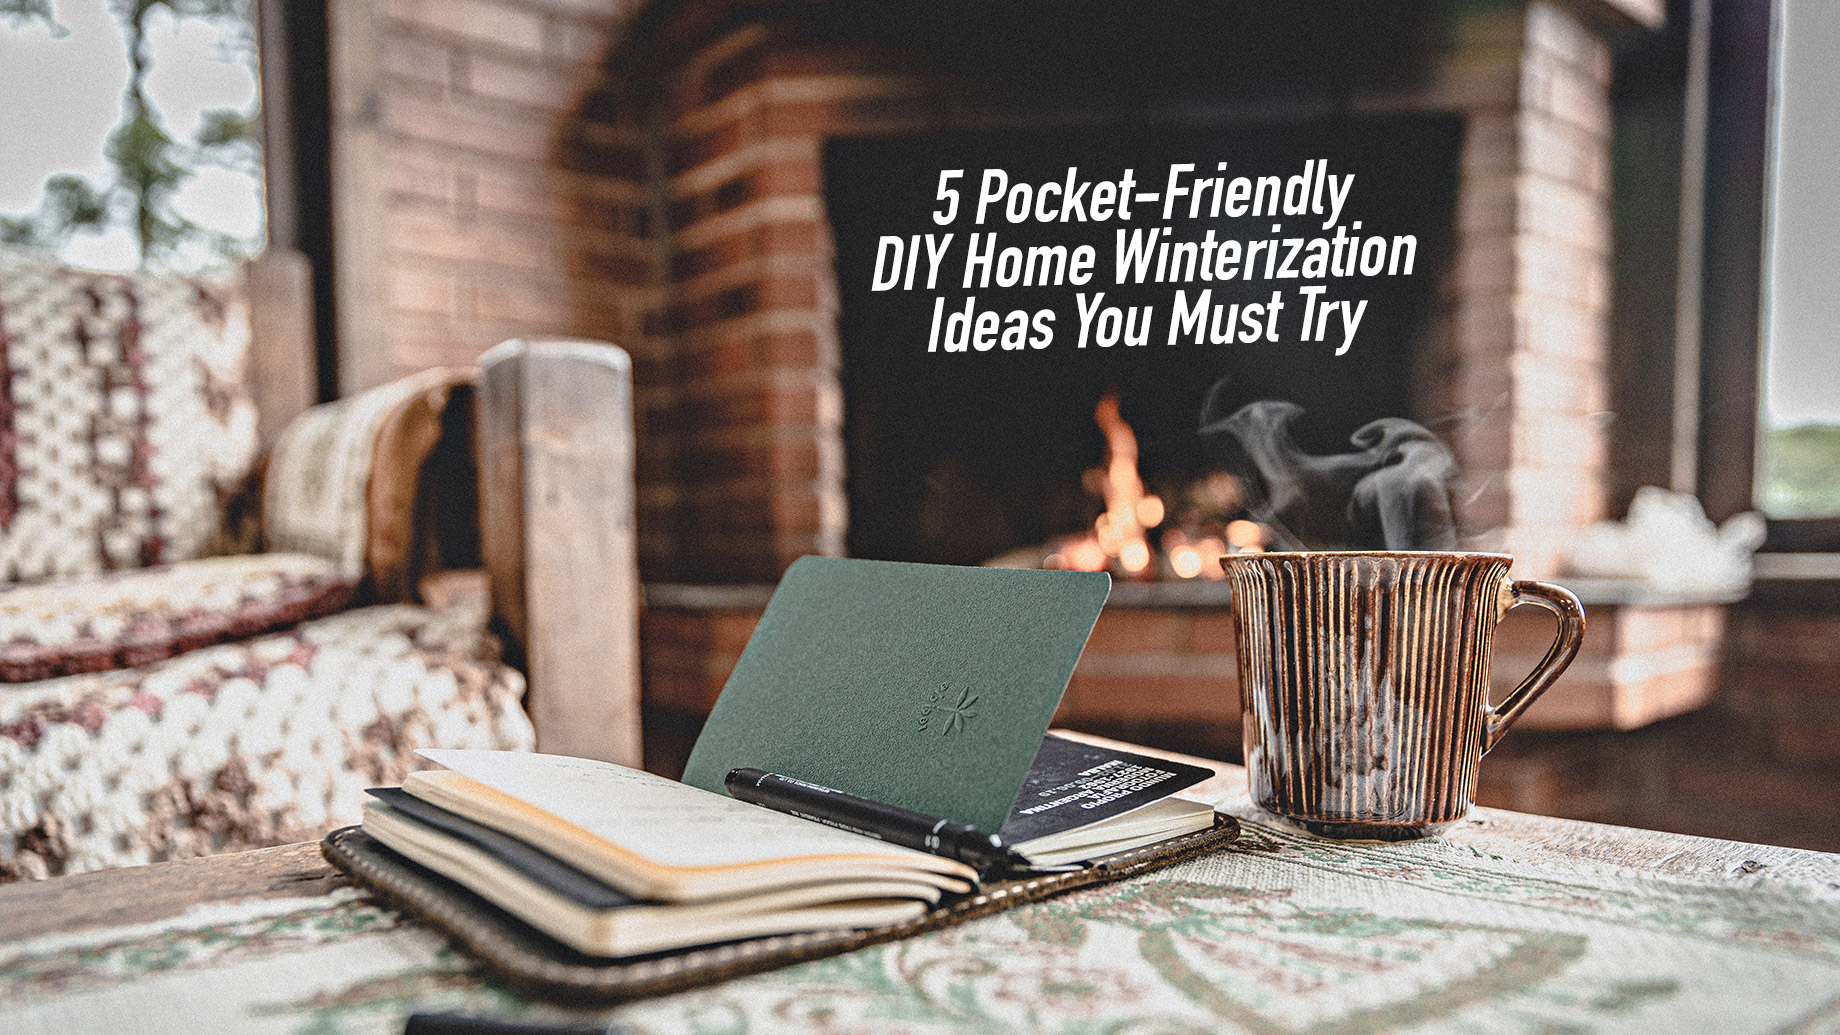 5 Pocket-Friendly DIY Home Winterization Ideas You Must Try